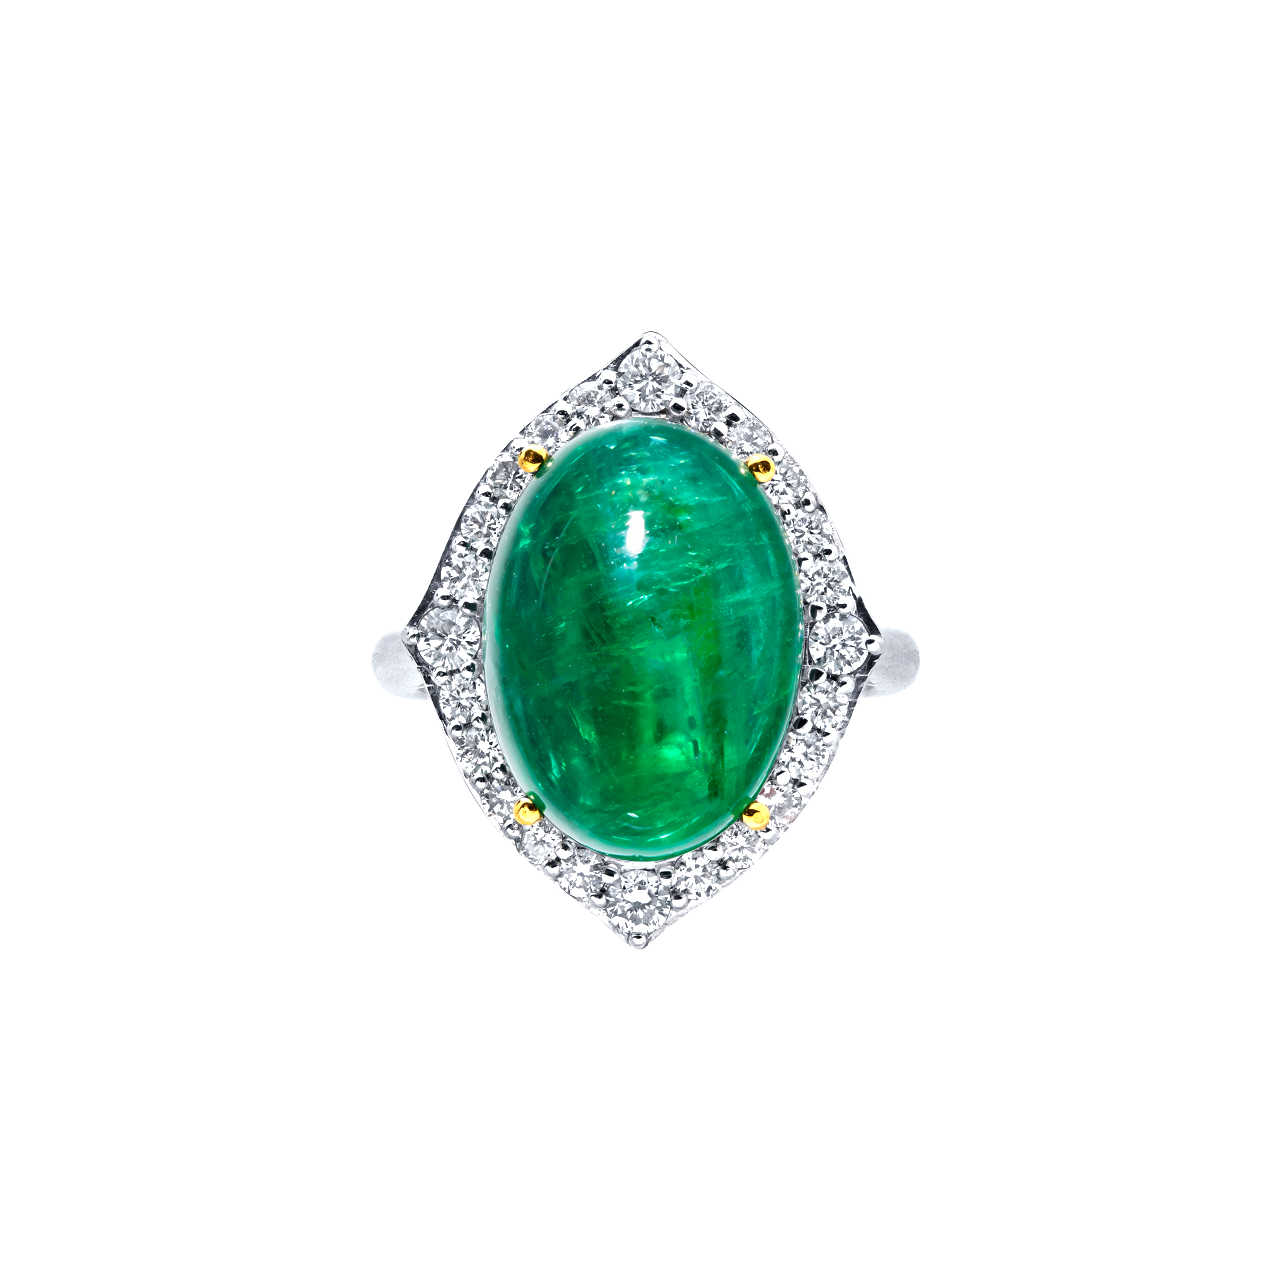 10.85克拉  尚比亞祖母綠鑽戒
Vivid Green Emerald from Zambia 
and Diamond Ring